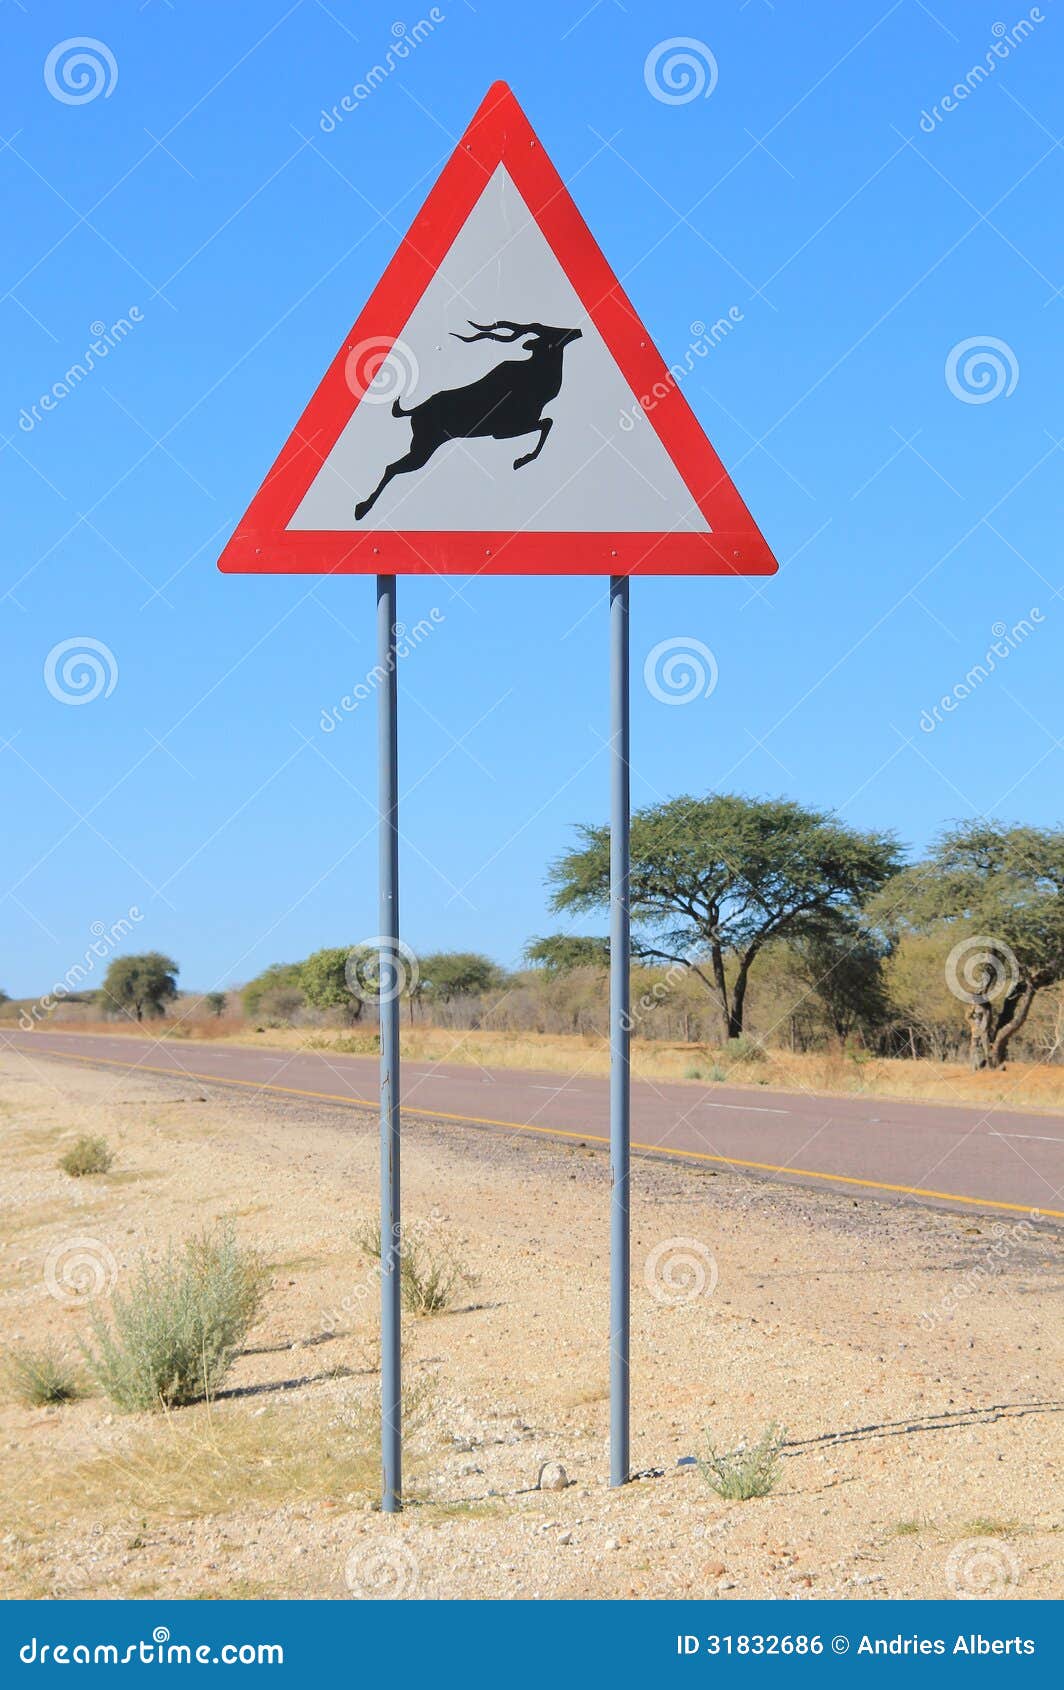 Warning sign of wildlife crossing